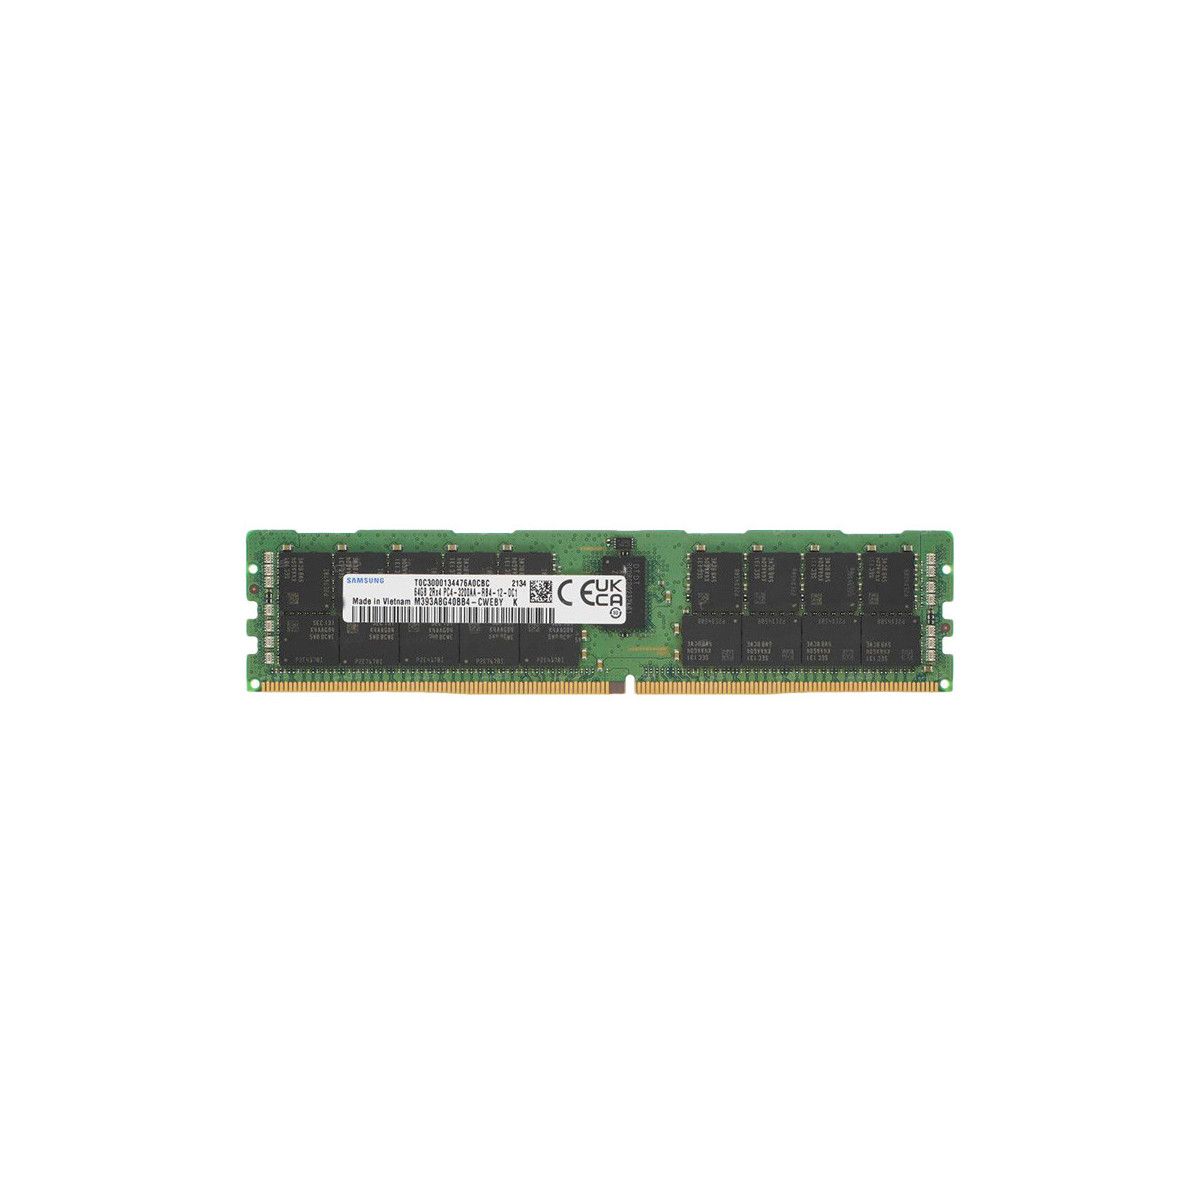 370-AEVP-MS - Memstar 1x 64GB DDR4-3200 RDIMM PC4-25600R - Mem-Star Compatible OEM Memory 1 - Memstar 